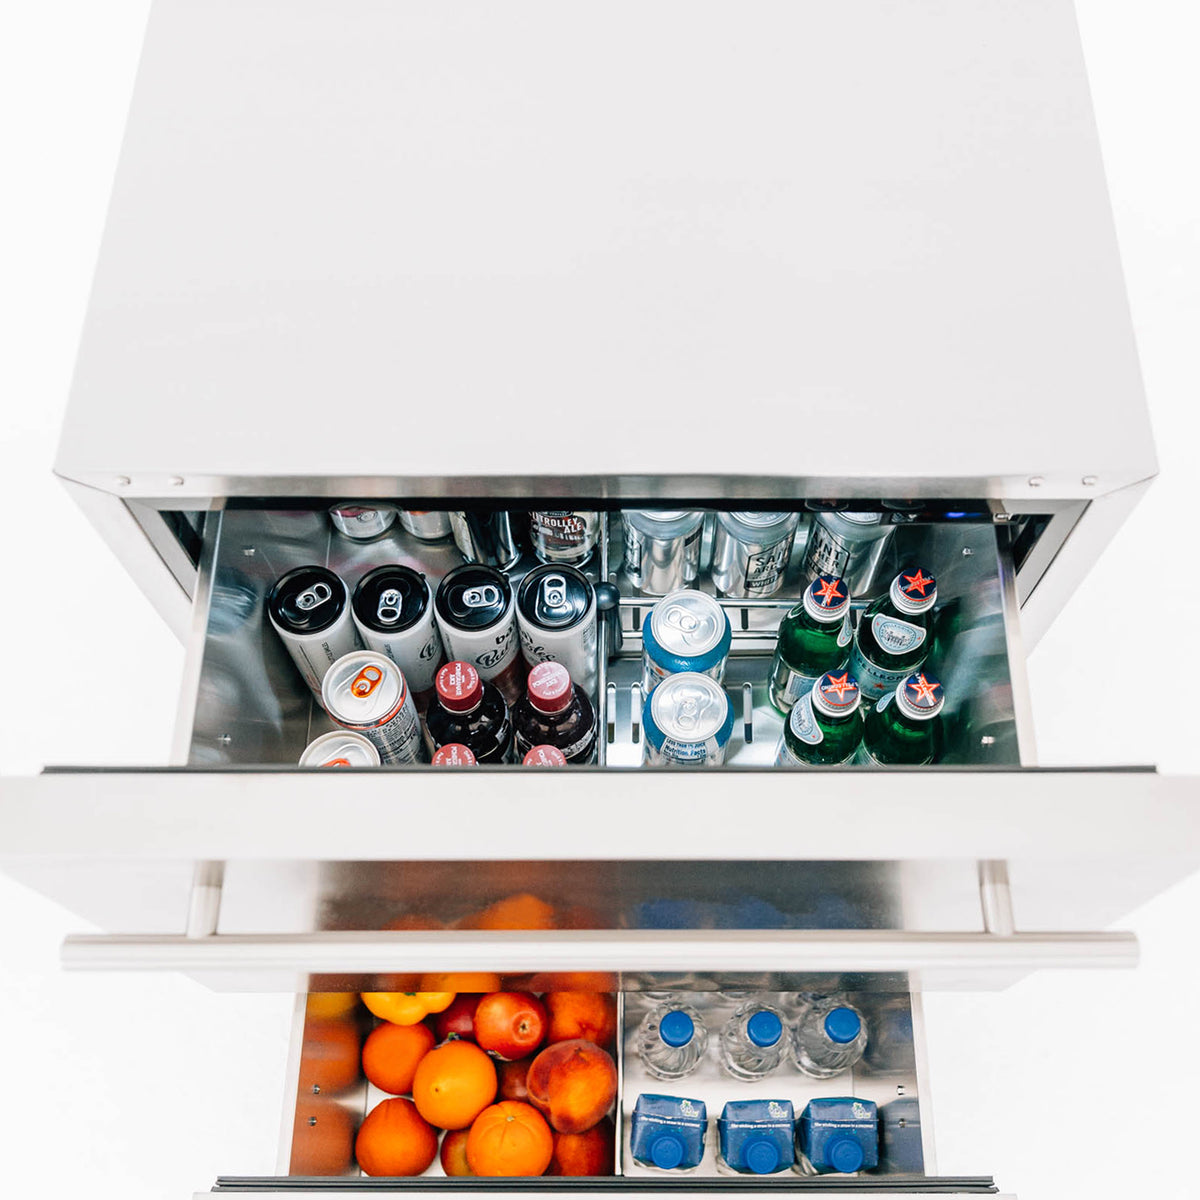 24 5.3c Deluxe Outdoor Rated 2-Drawer Refrigerator – Summerset Grills